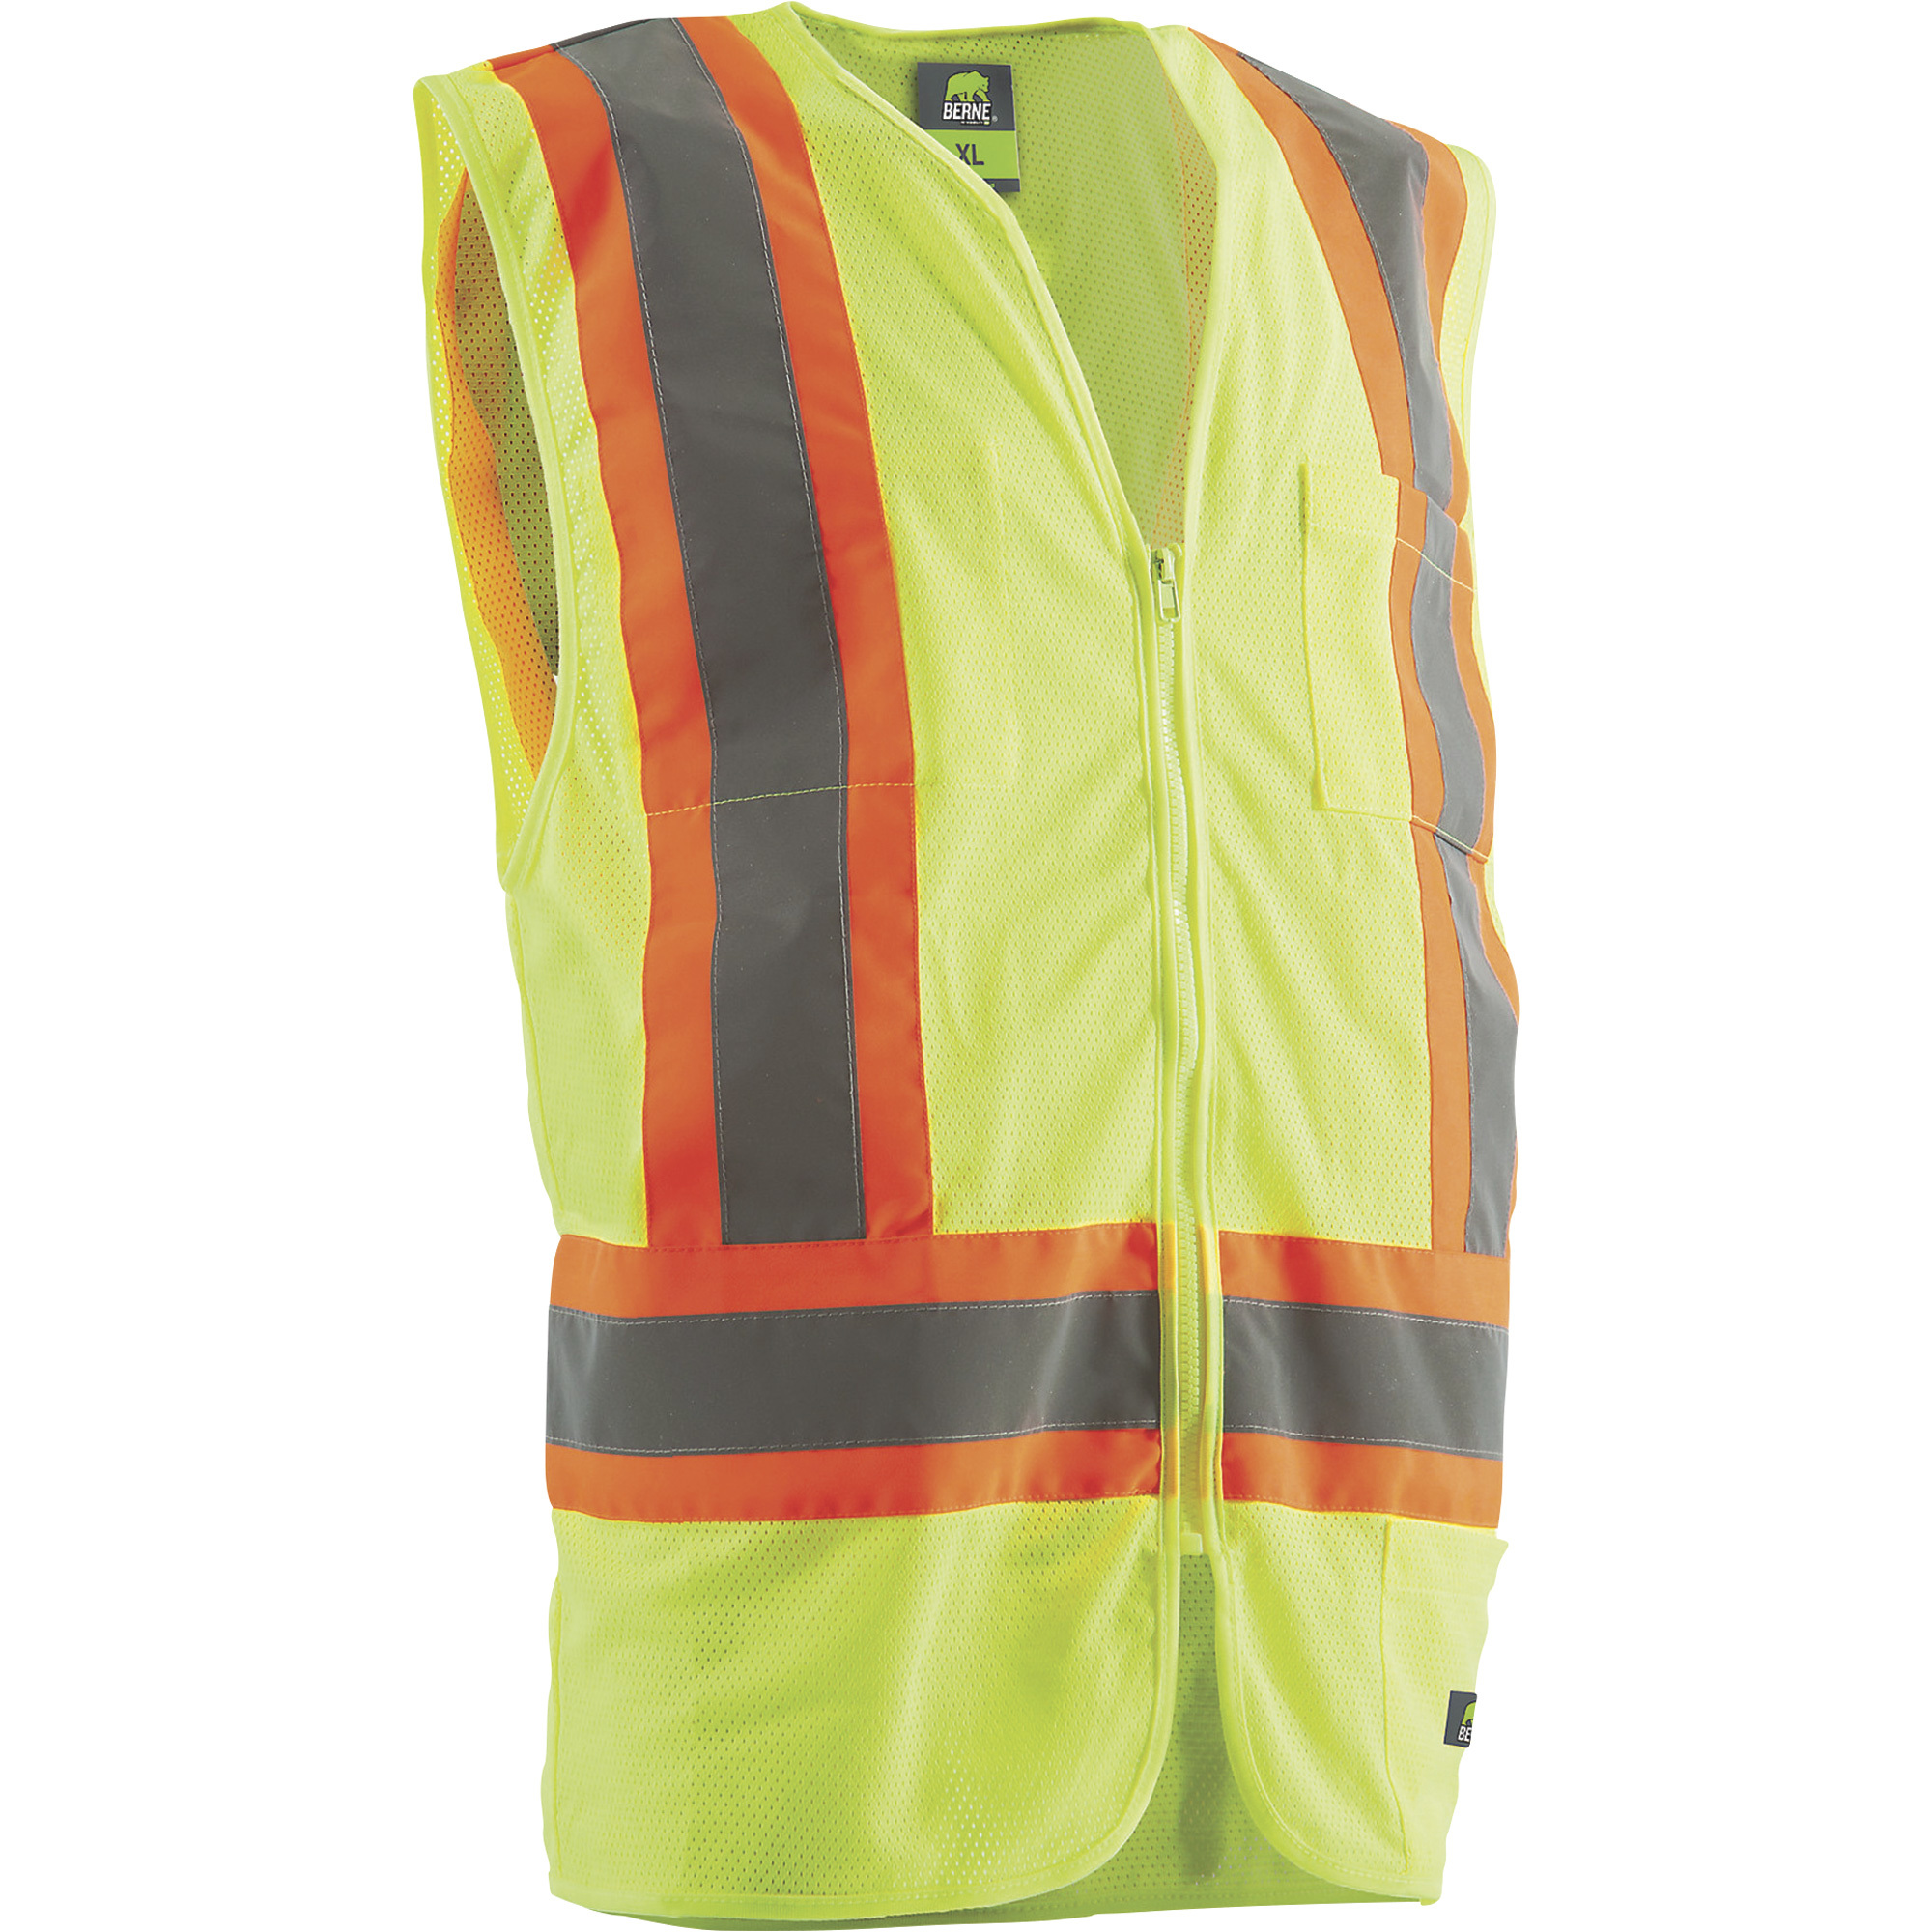 Berne Men's Class 2 High Visibility 2-Tone Safety Vest â Orange/Lime, Medium, Model HVV046YWBT